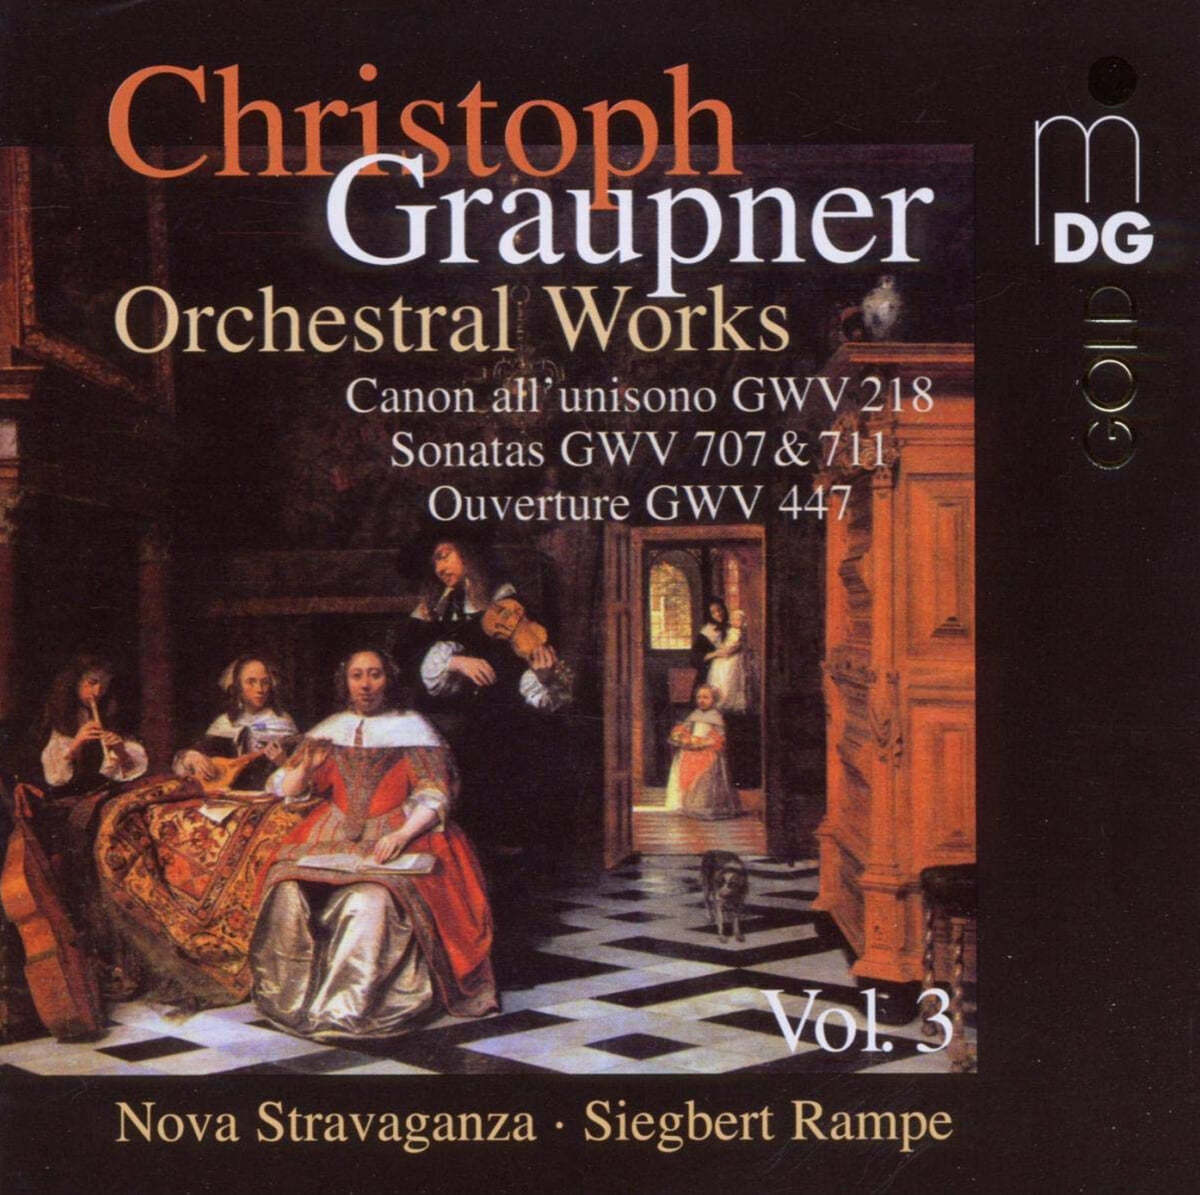 Siegbert Rampe 크리스토프 그라우프너: 관현악 작품집 3집 (Christoph Graupner: Orchestral Works Vol. 3) 